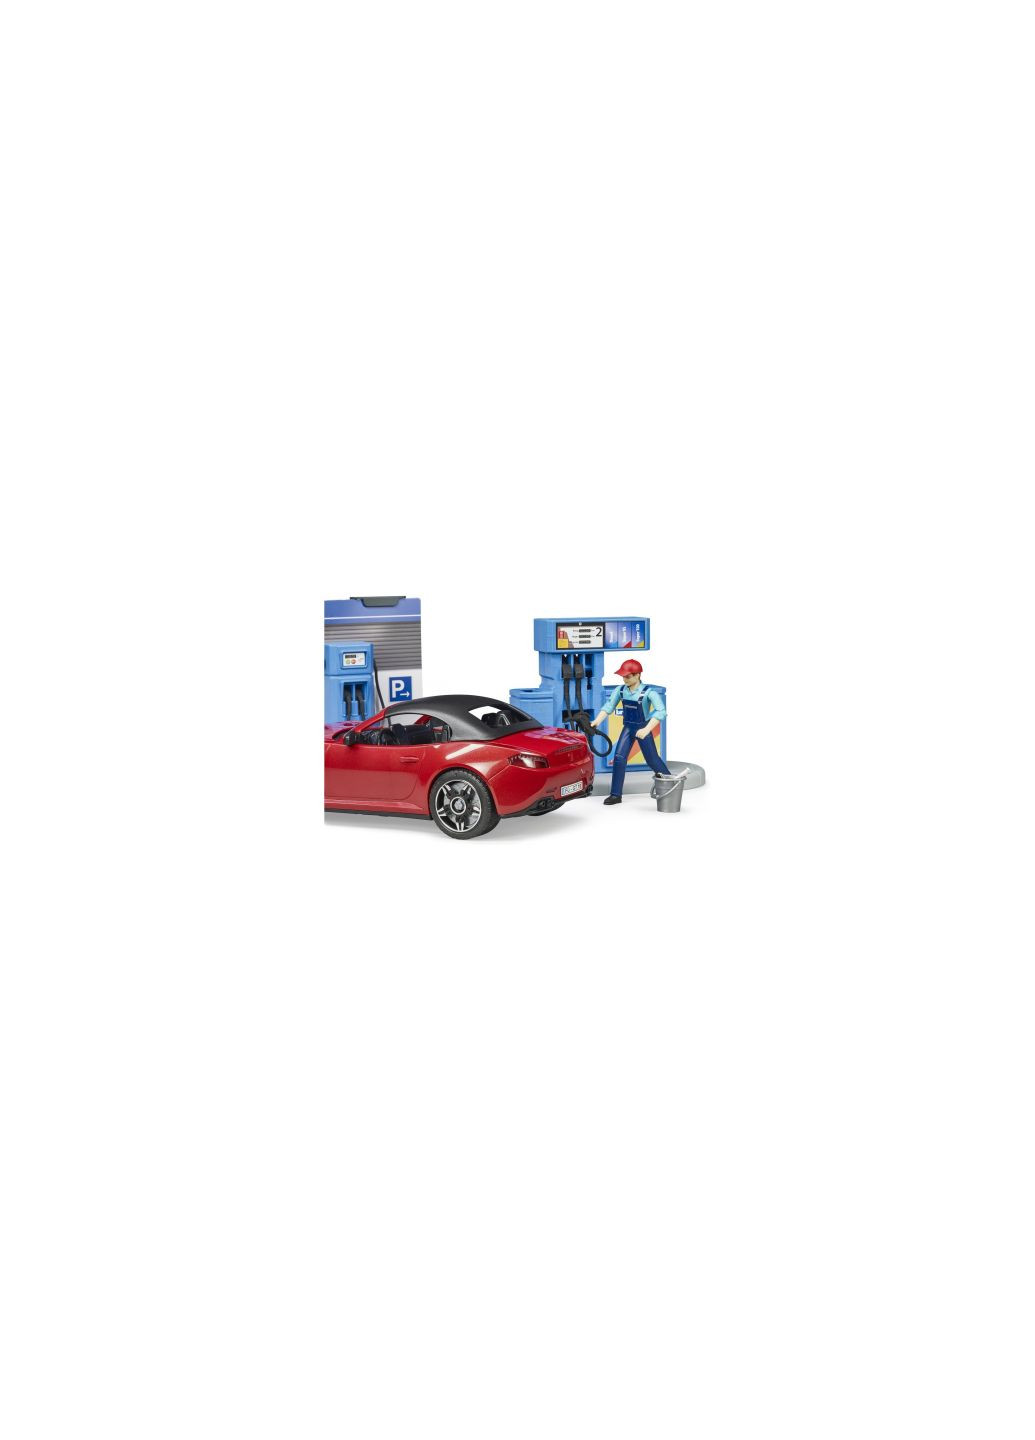 Игровой набор АЗС с автомойкой, автомобилем и фигурками (62111) Bruder азс з автомийкою, автомобілем та фігурками (275646551)